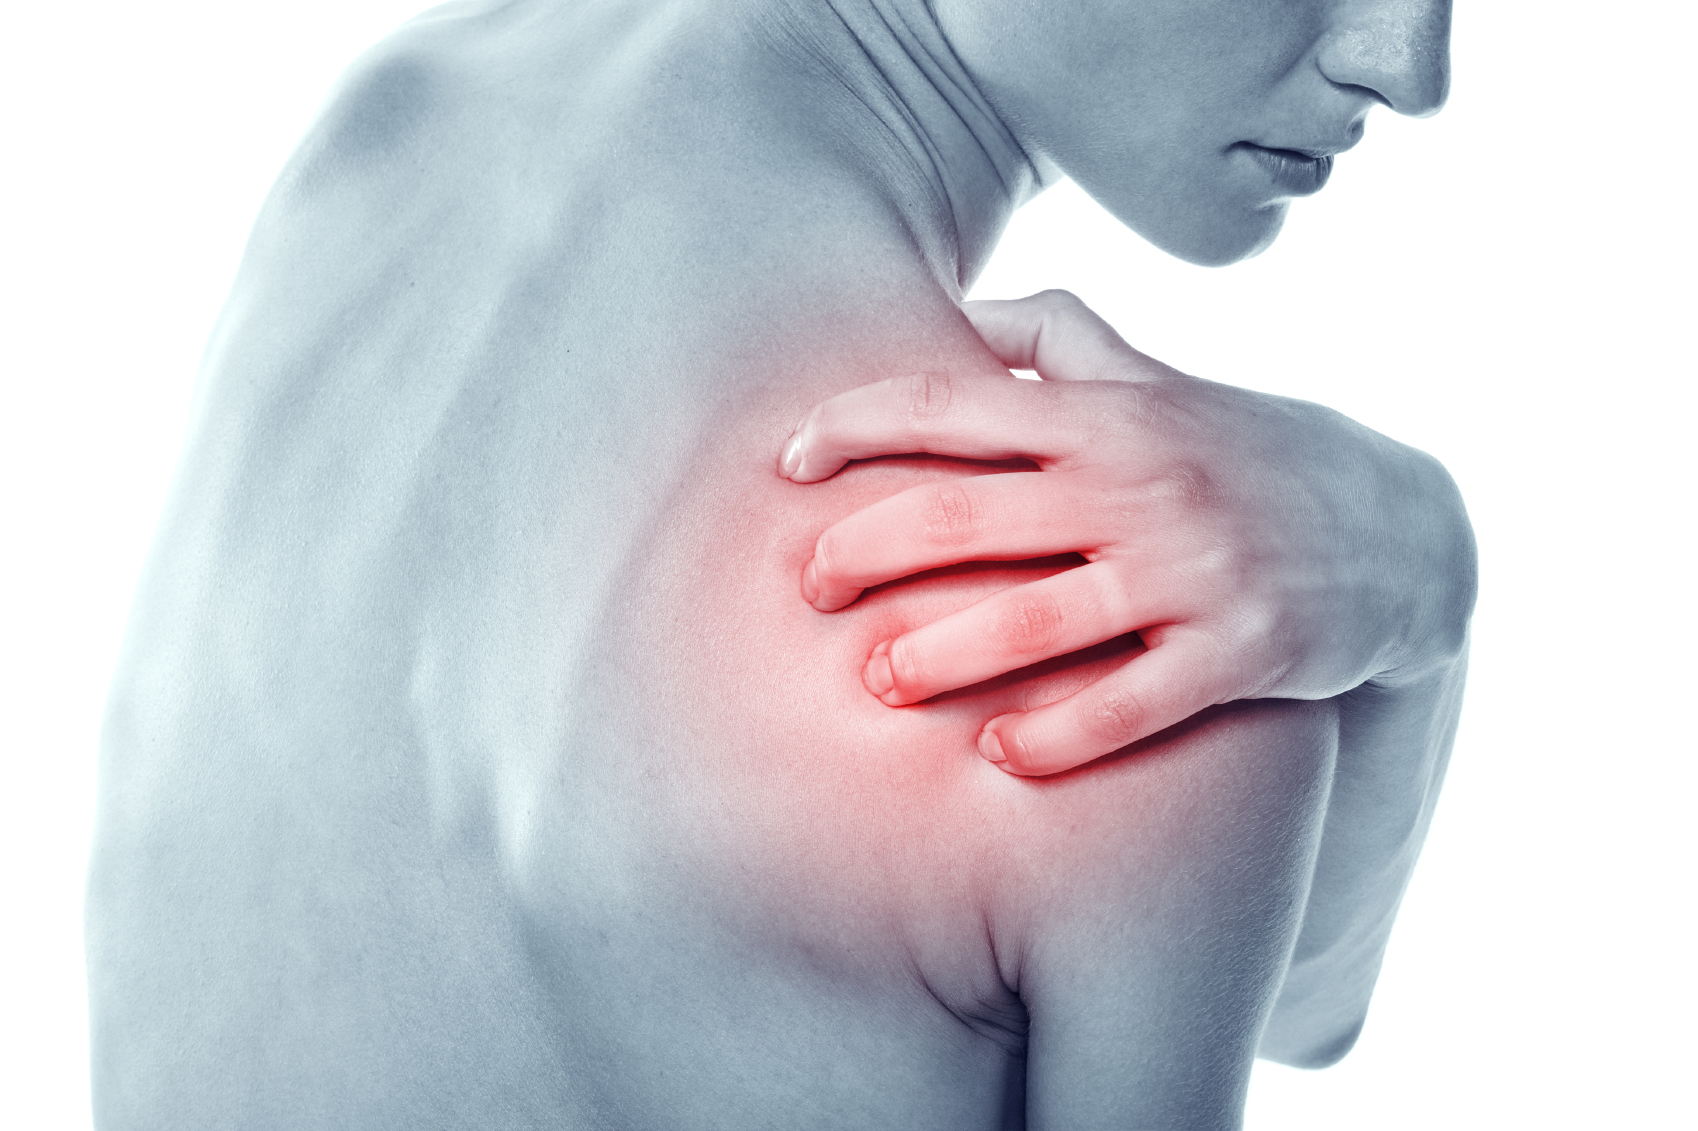 Neck/Upper Back Pain - West Suburban Pain Relief